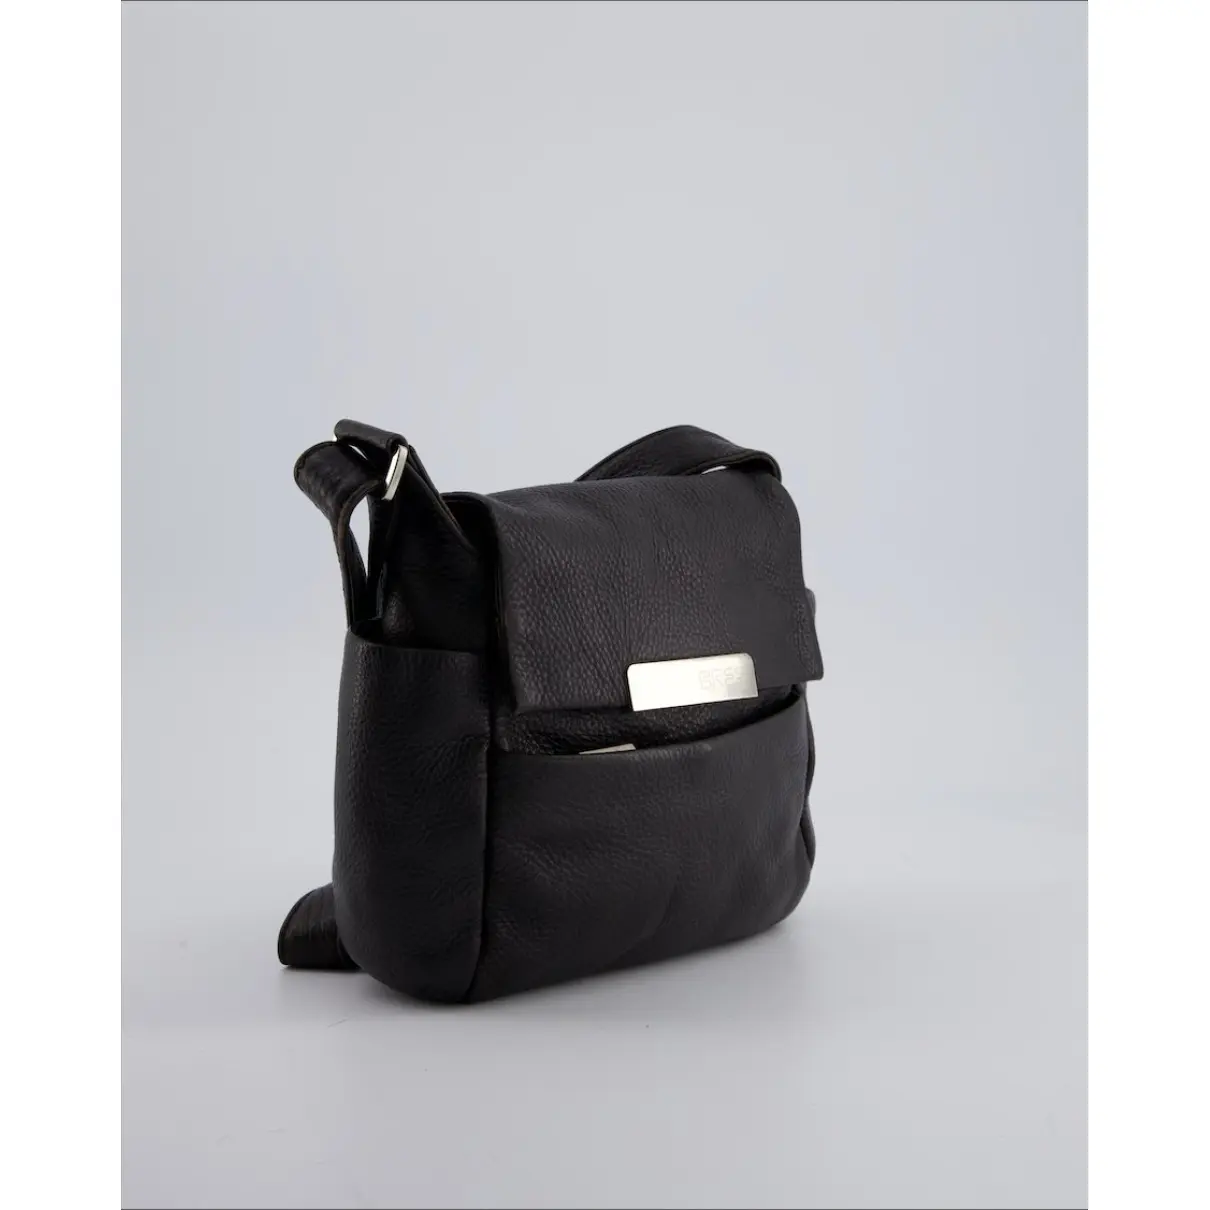 Buy Bree Leather crossbody bag online